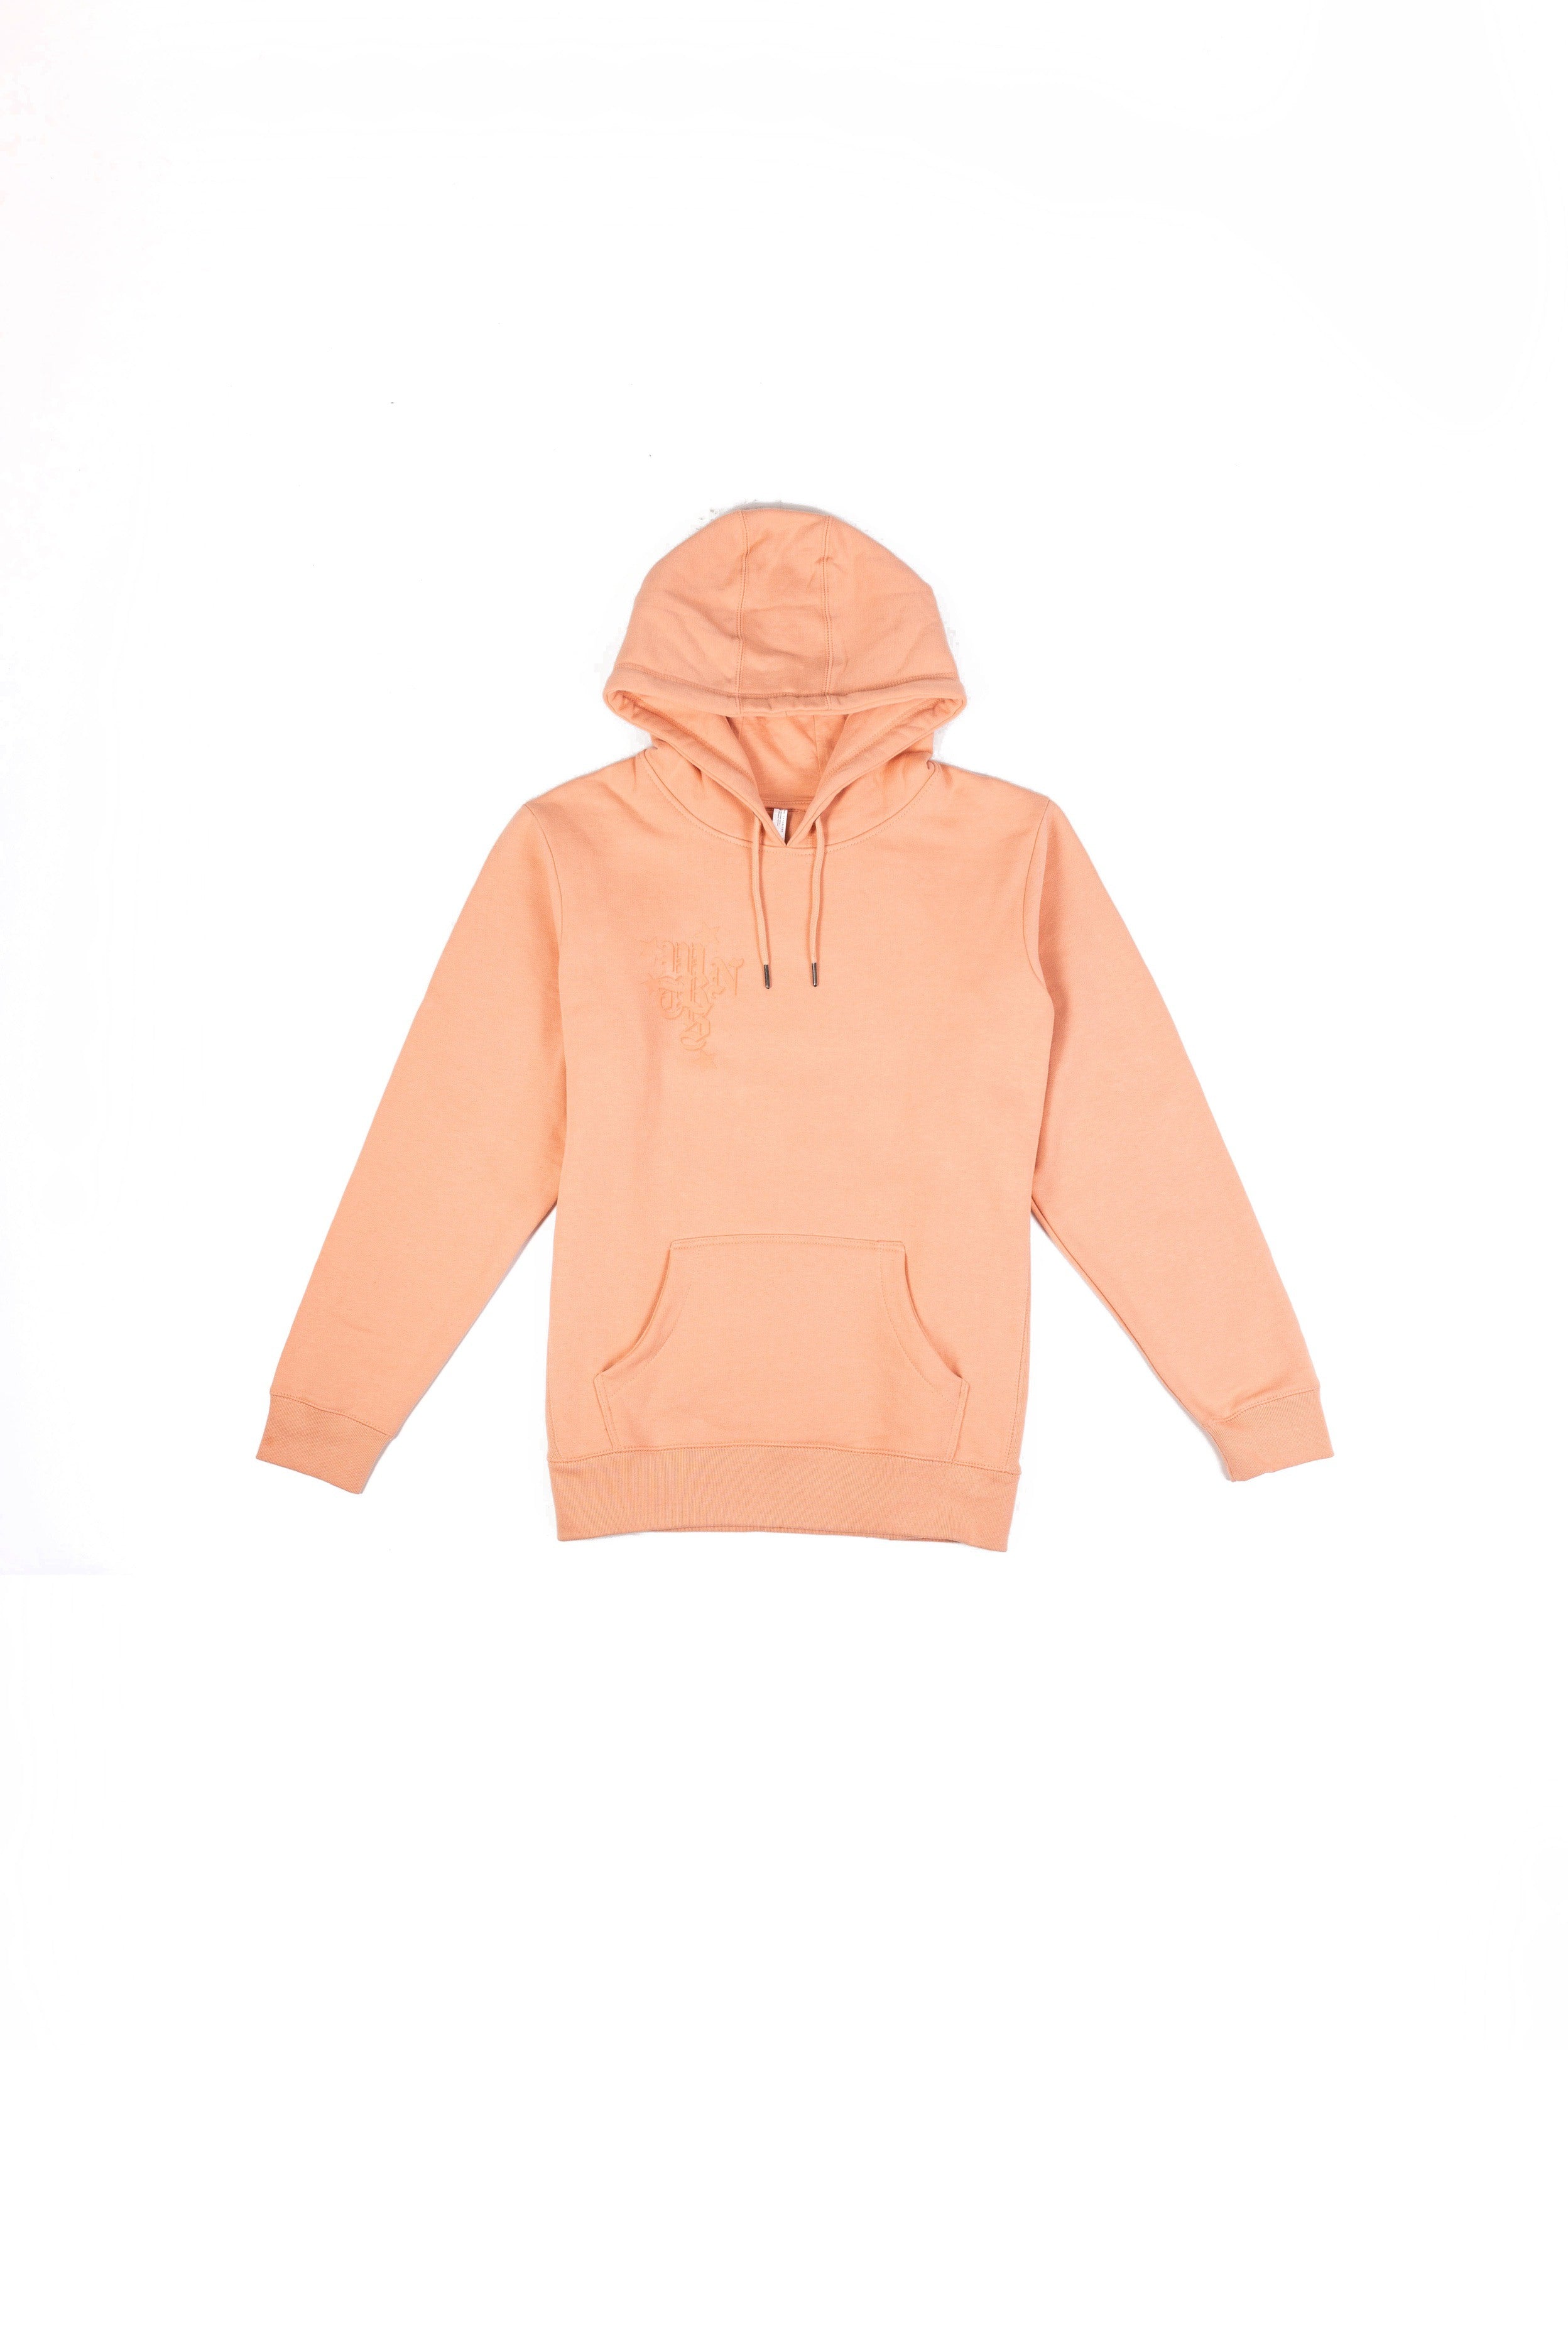 wrnts hoodie in salmon - Different Streetwear